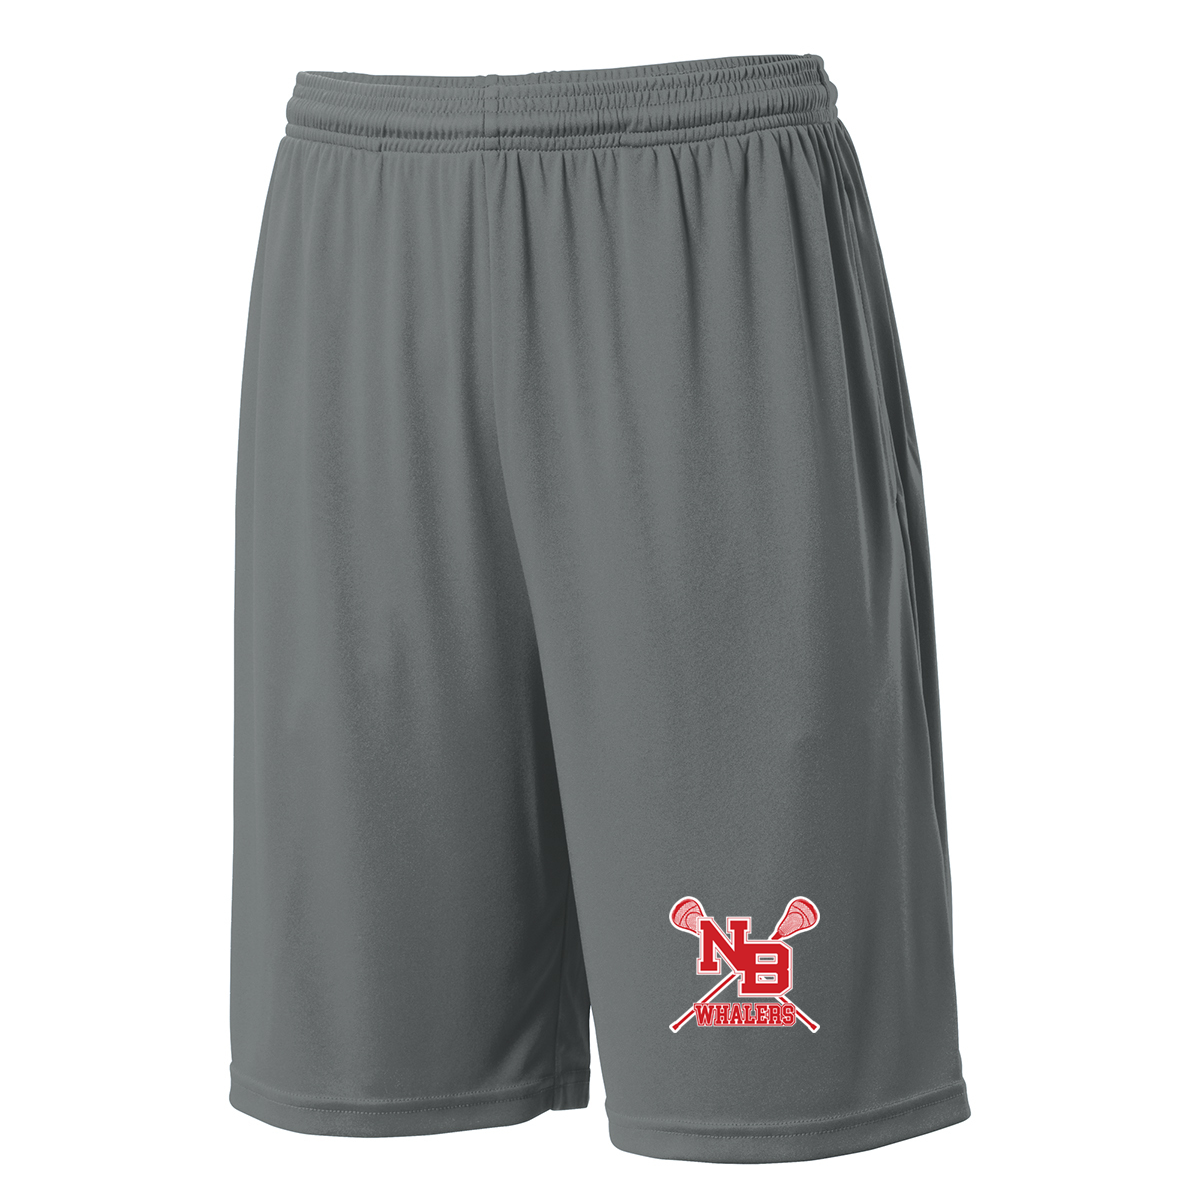 New Bedford Lacrosse Shorts